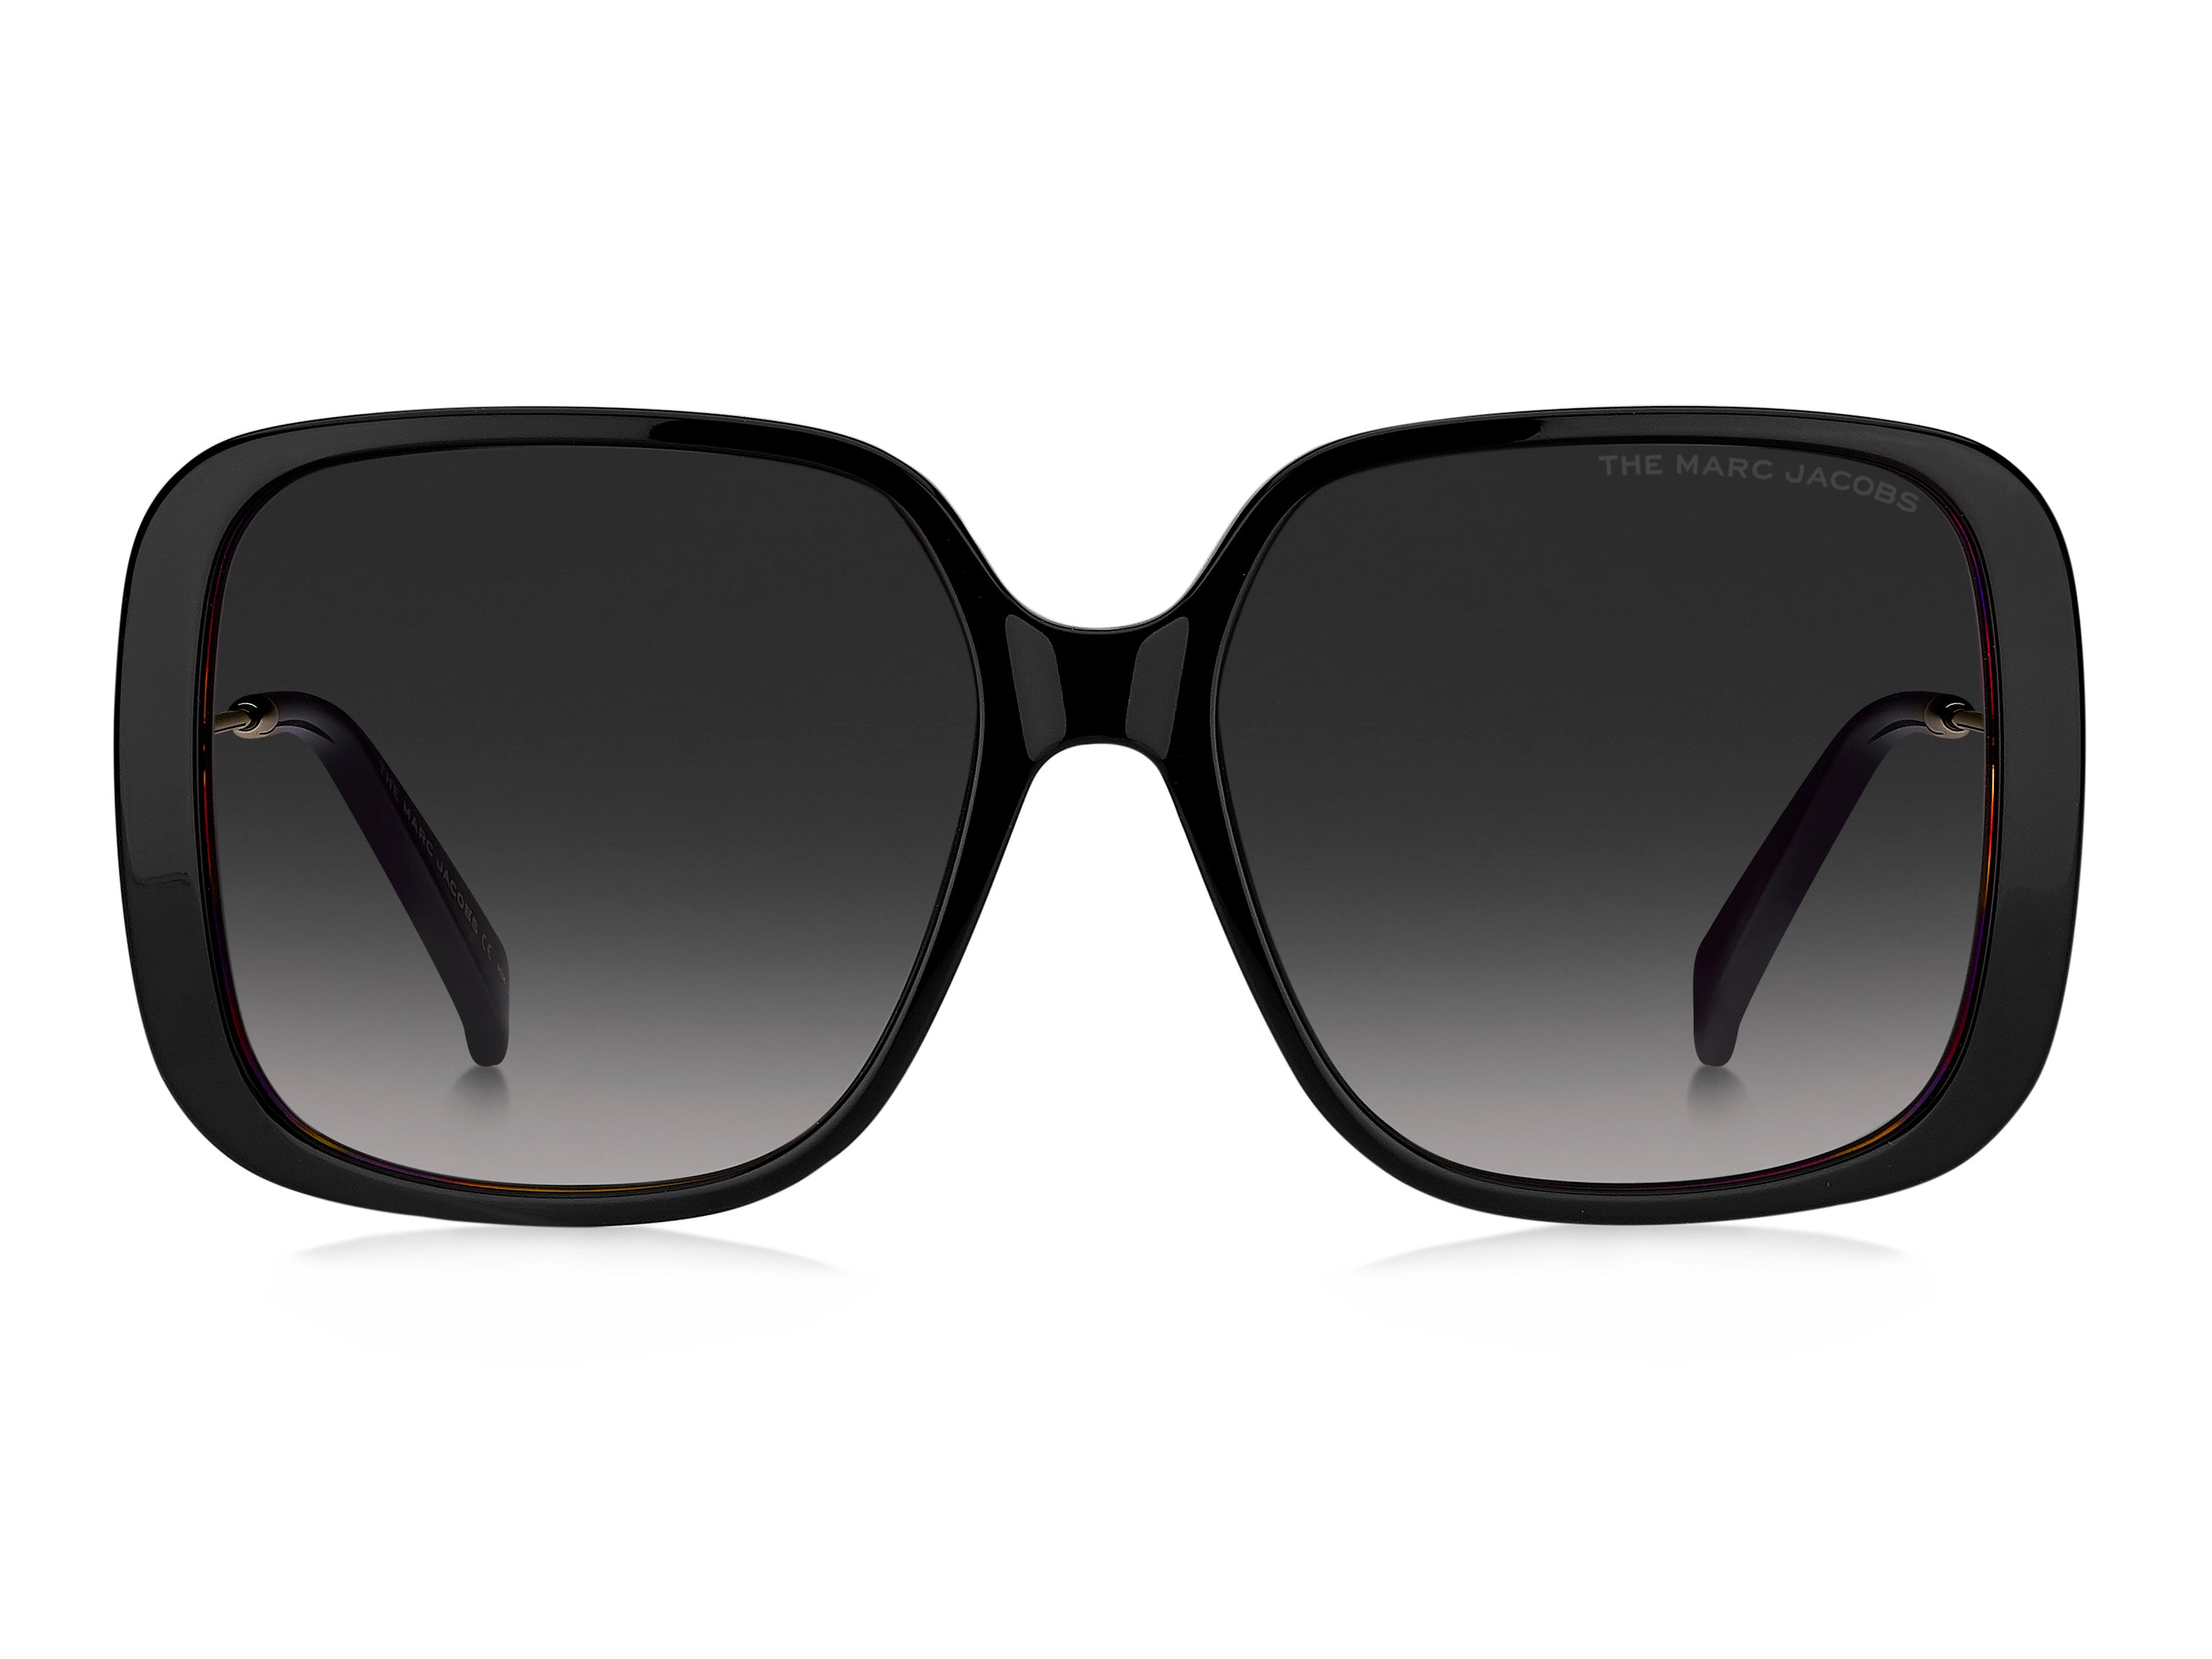 Carolina Herrera's New Sunglasses Are as Glam as You'd Expect